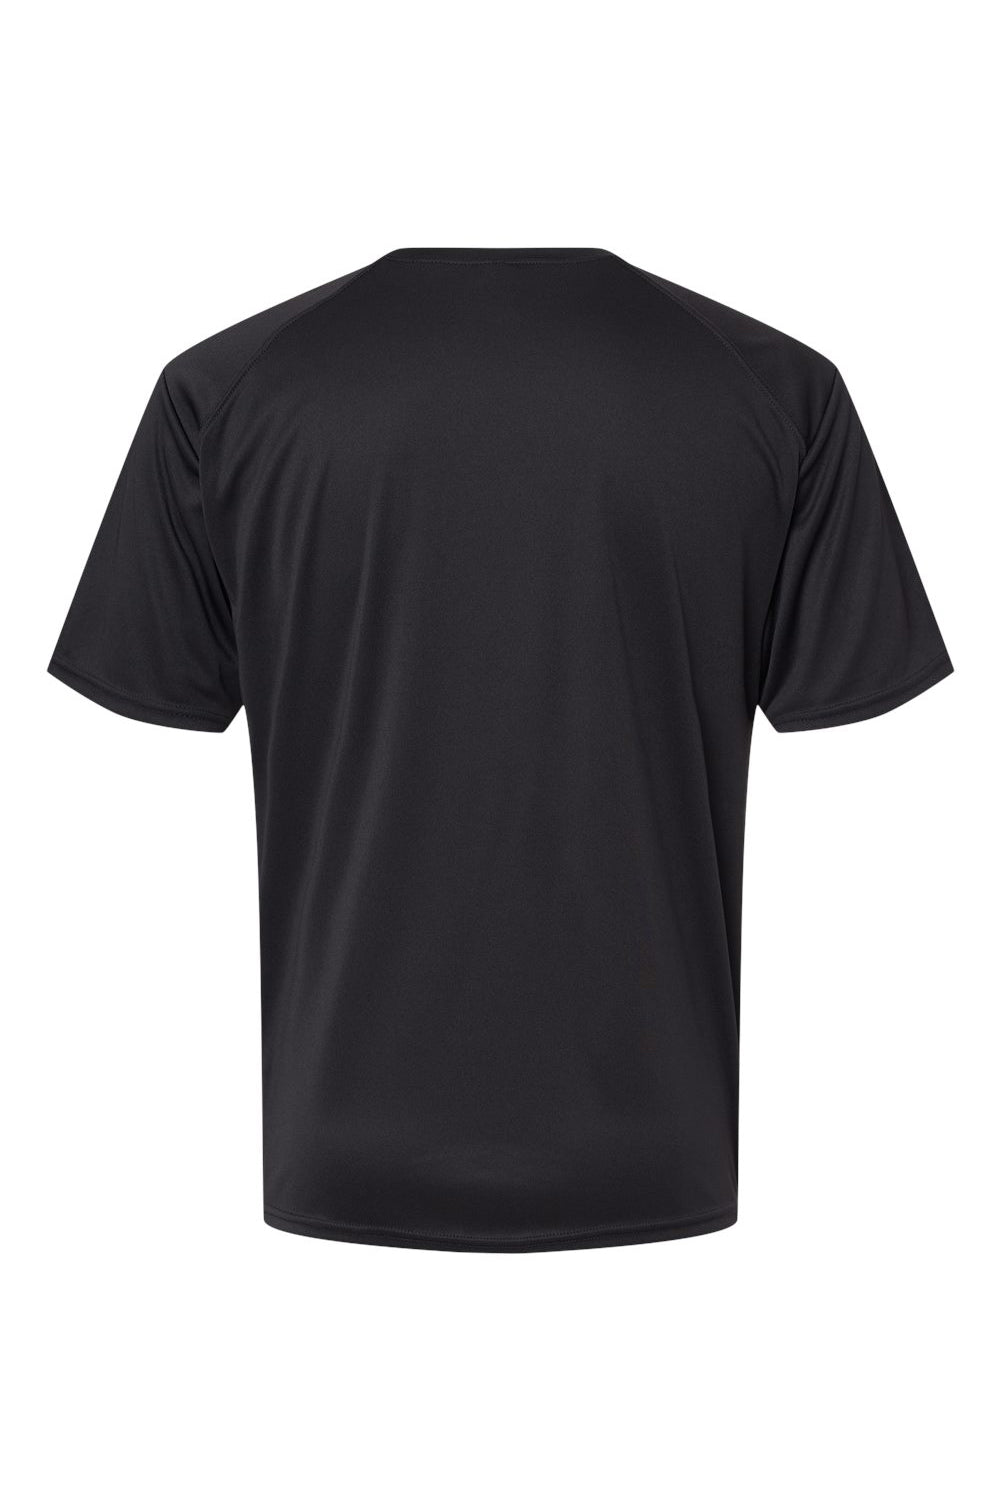 Paragon 200 Mens Islander Performance Short Sleeve Crewneck T-Shirt Black Flat Back